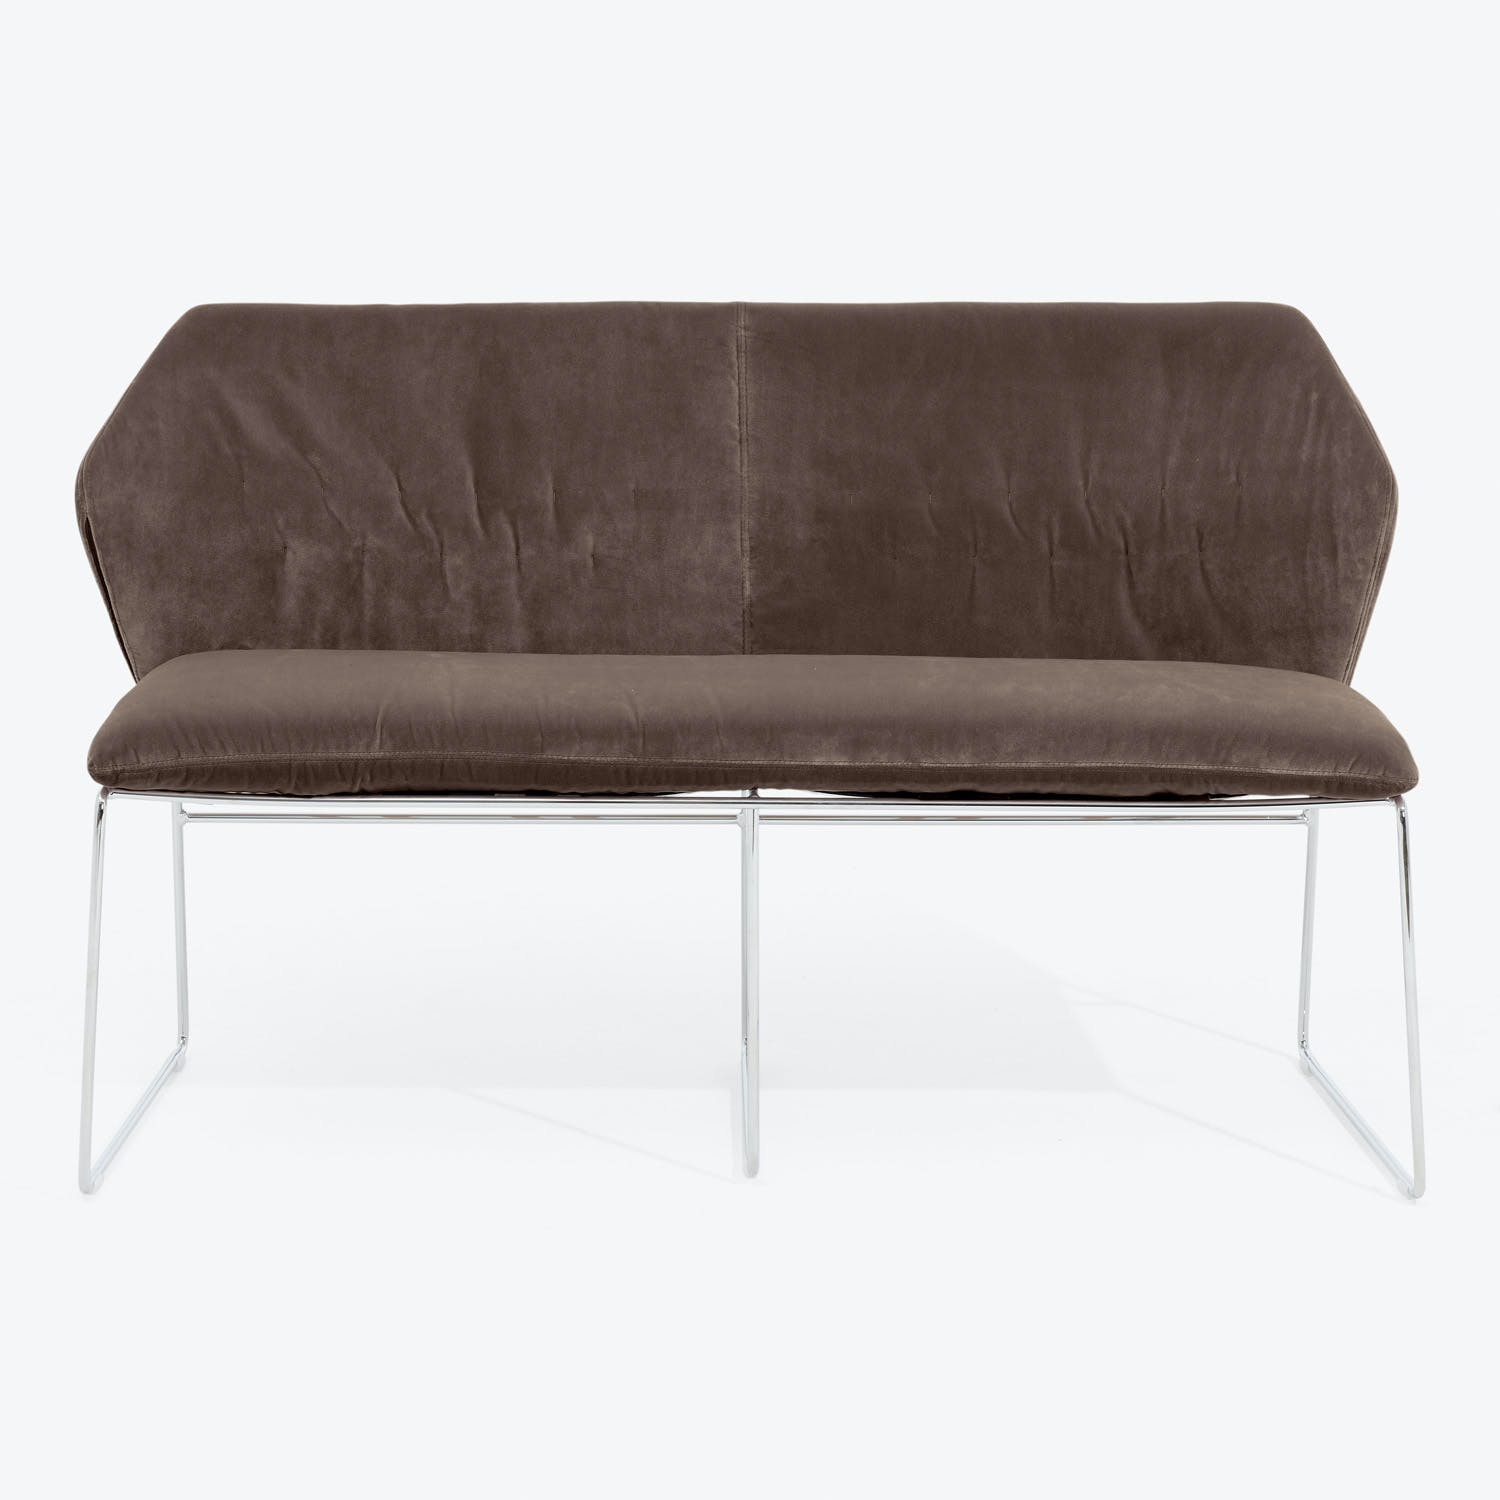 Modern-style sofa with minimalist design and sleek chrome legs